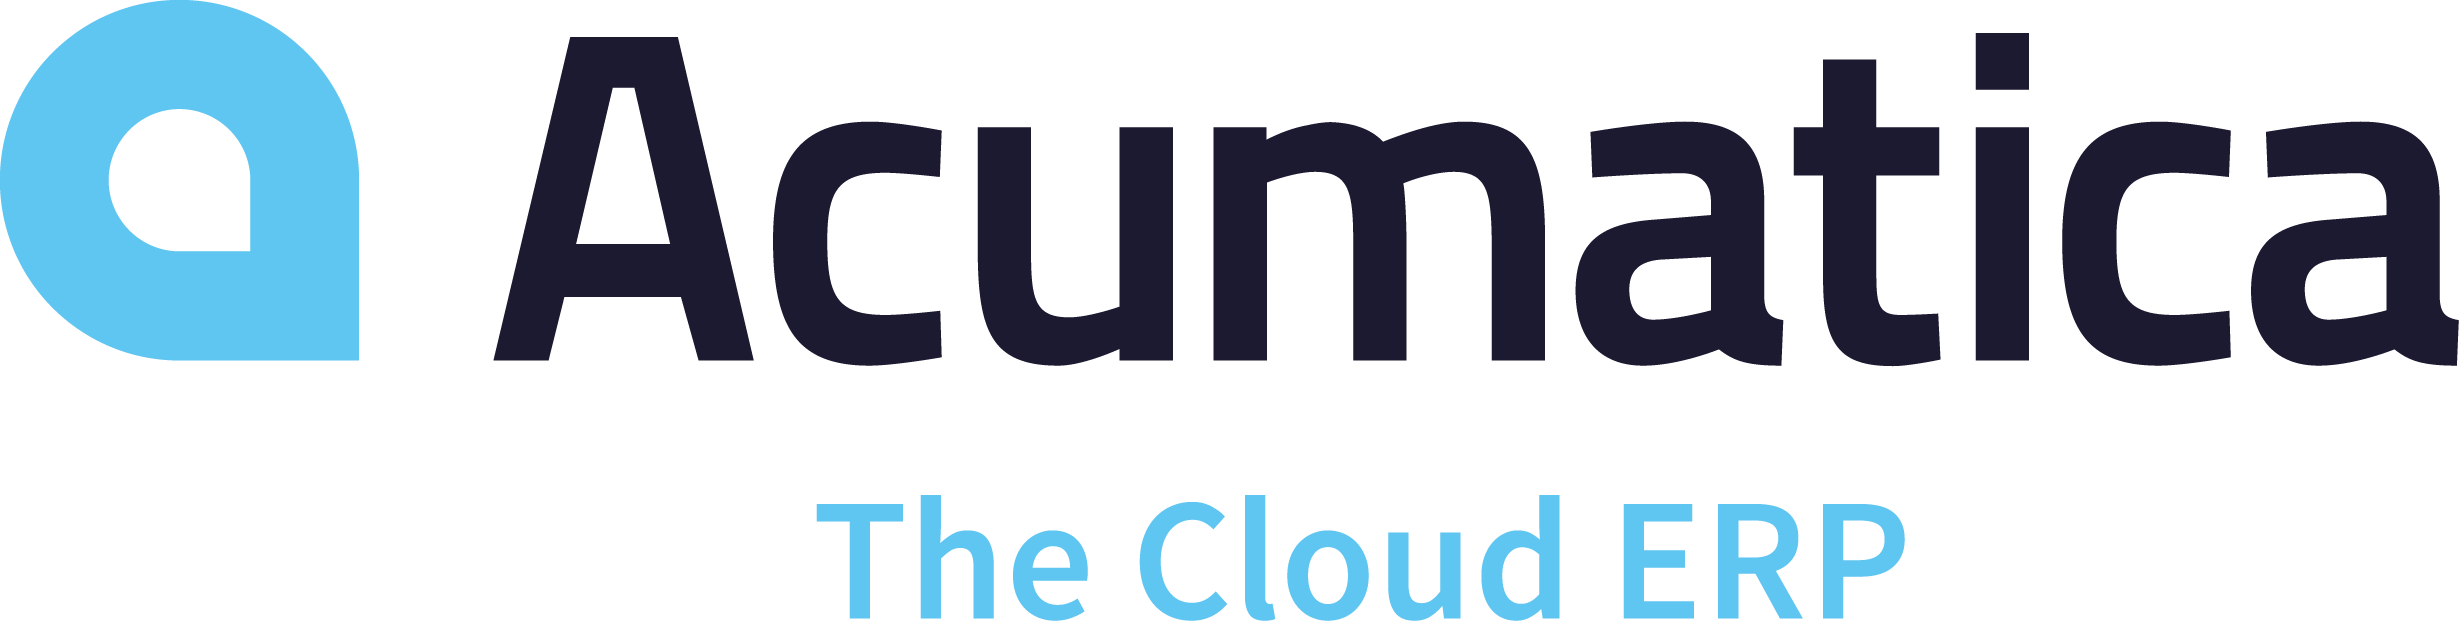 Acumatica Logo - Acumatica Tech Services